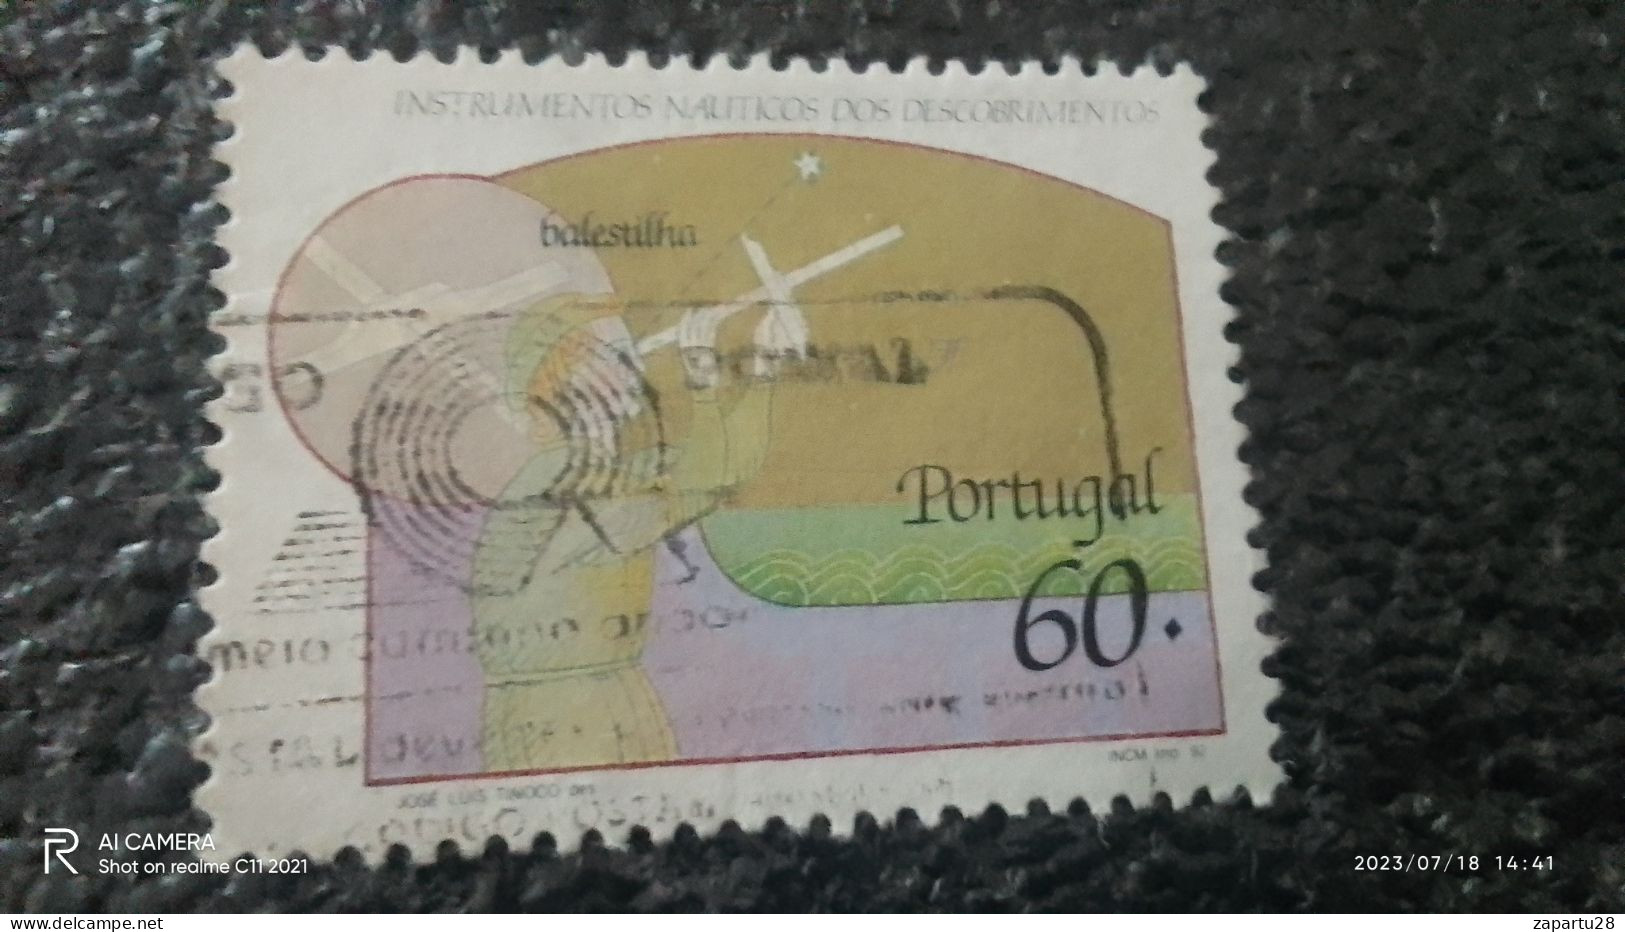 PORTEKİZ-1990-00-----                    60ESC      USED - Used Stamps